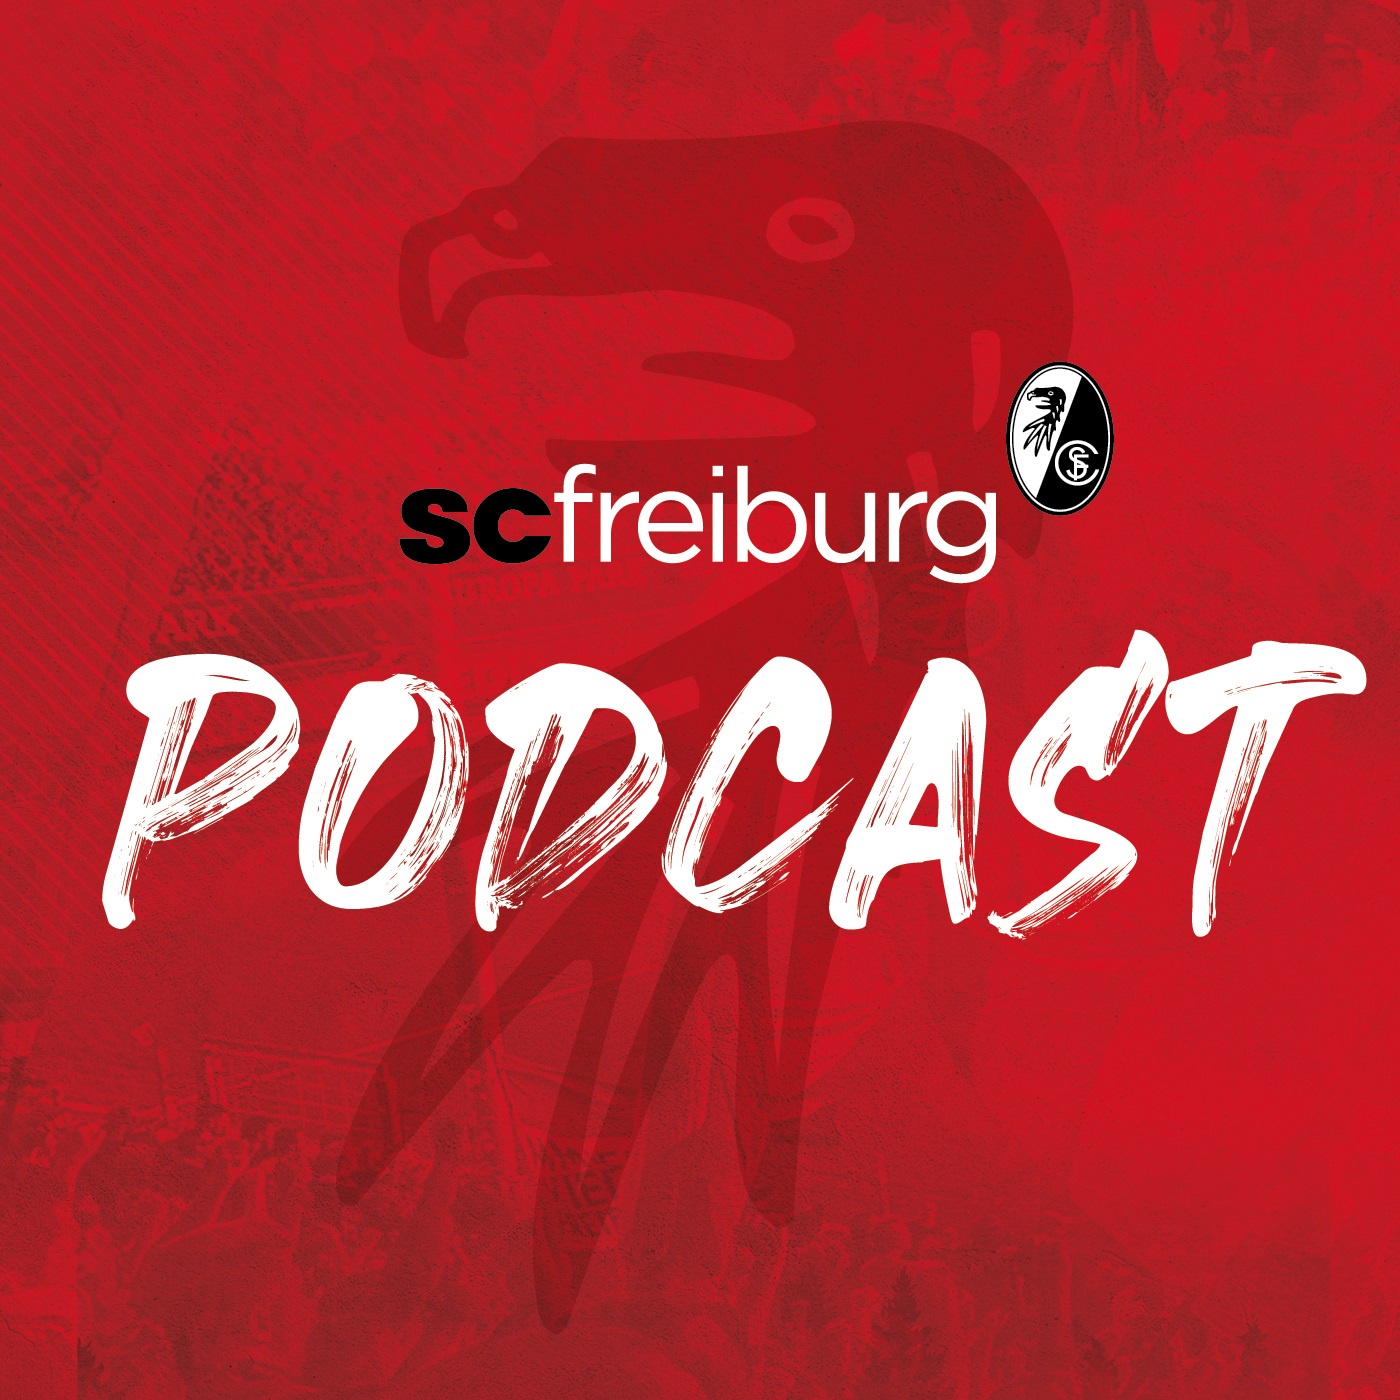 Der offizielle SC-Podcast